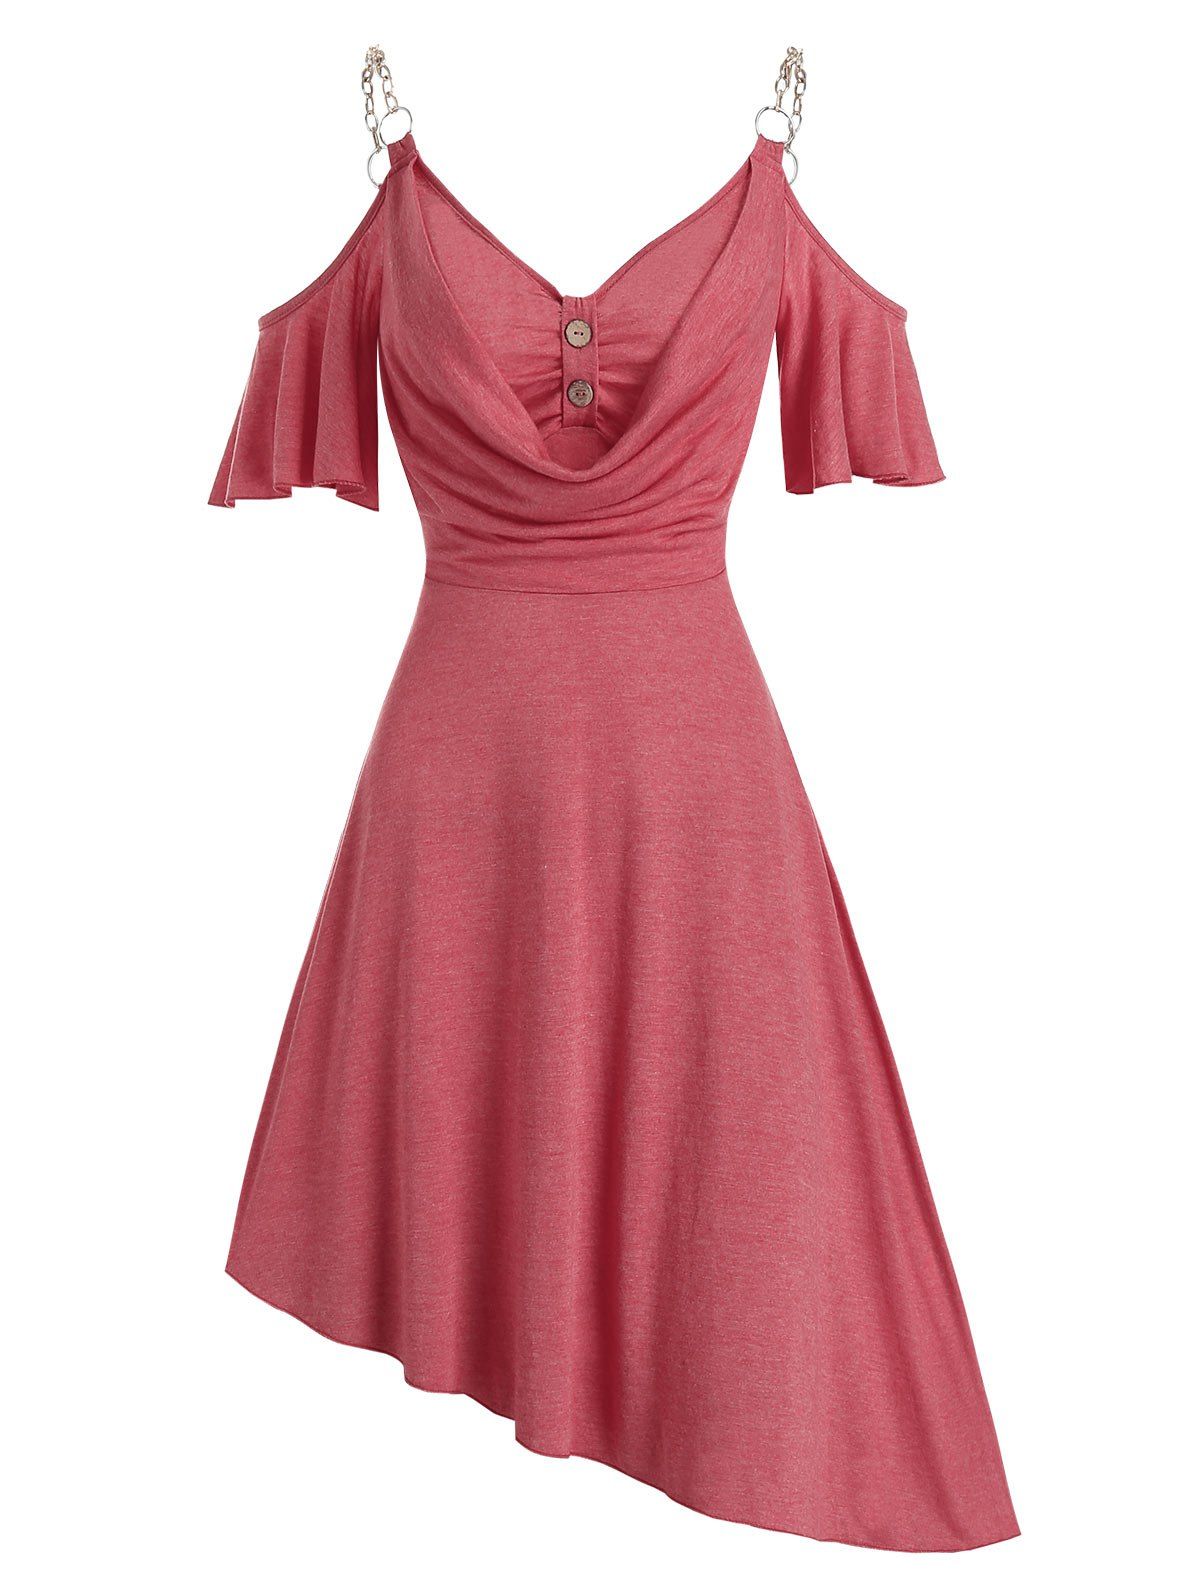 Chain Strap Cold Shoulder Draped Asymmetric Dress - RED L